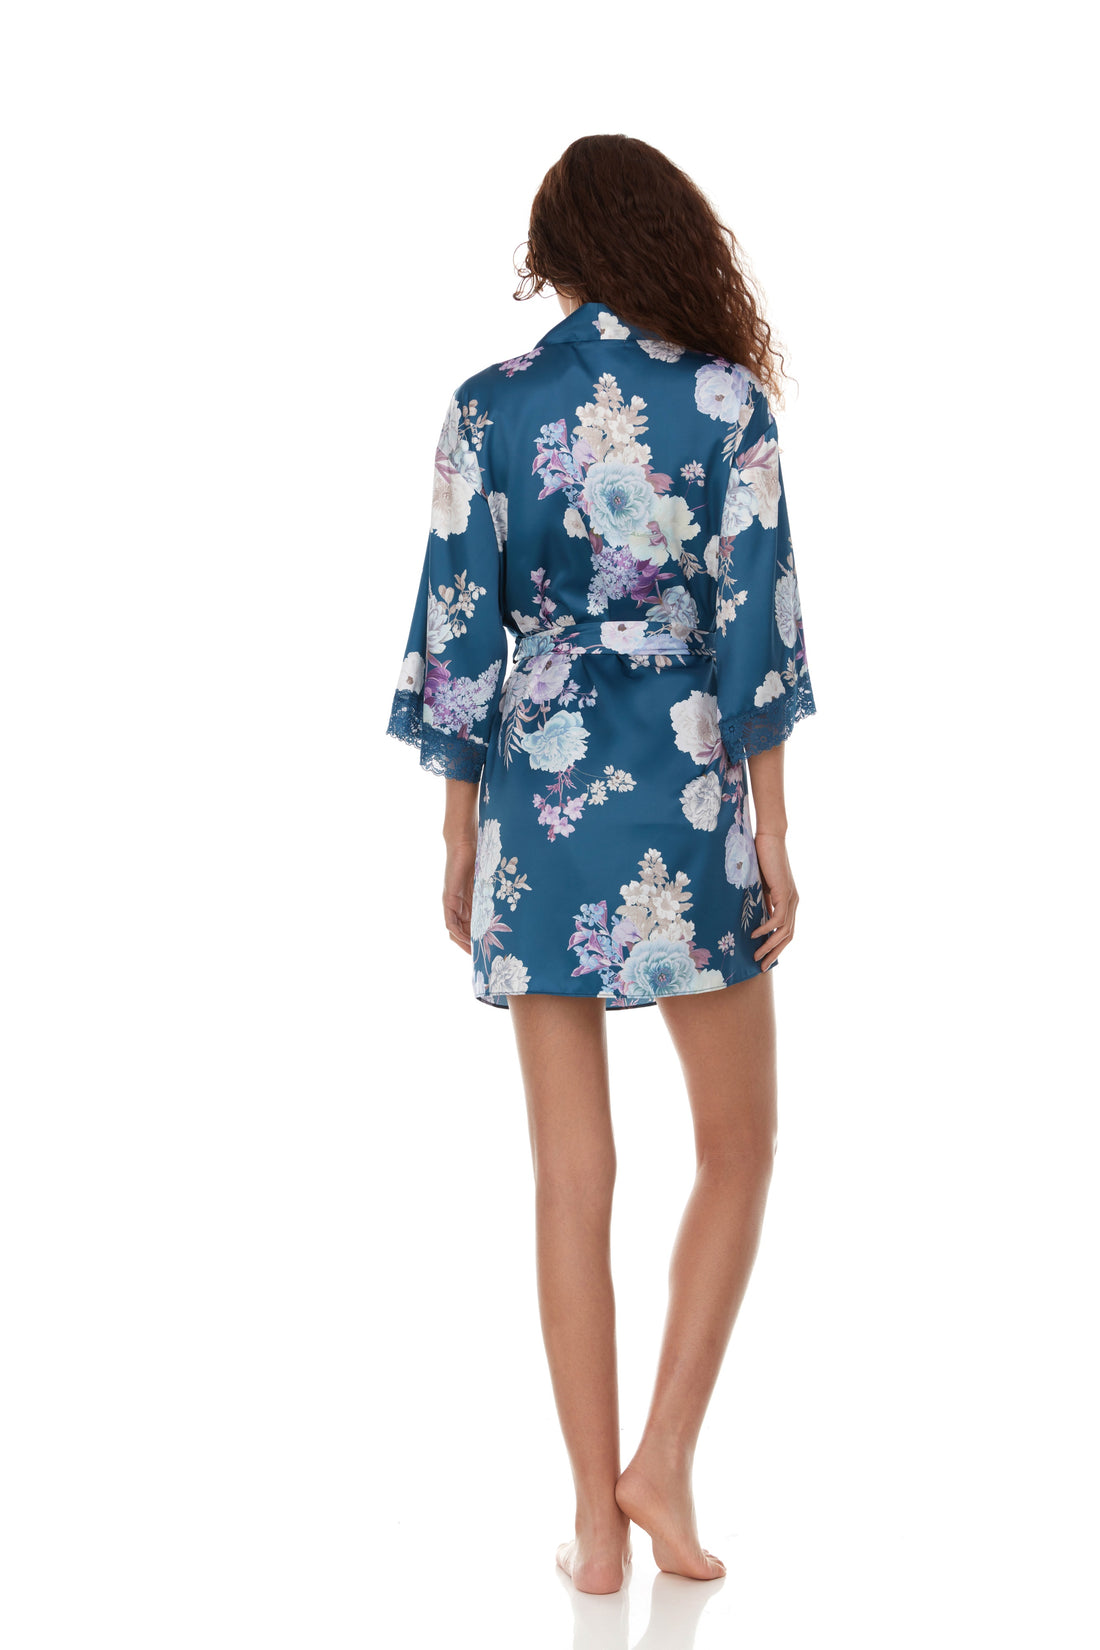 Sabrina Floral Print Satin Short Pajamas & Robe Set